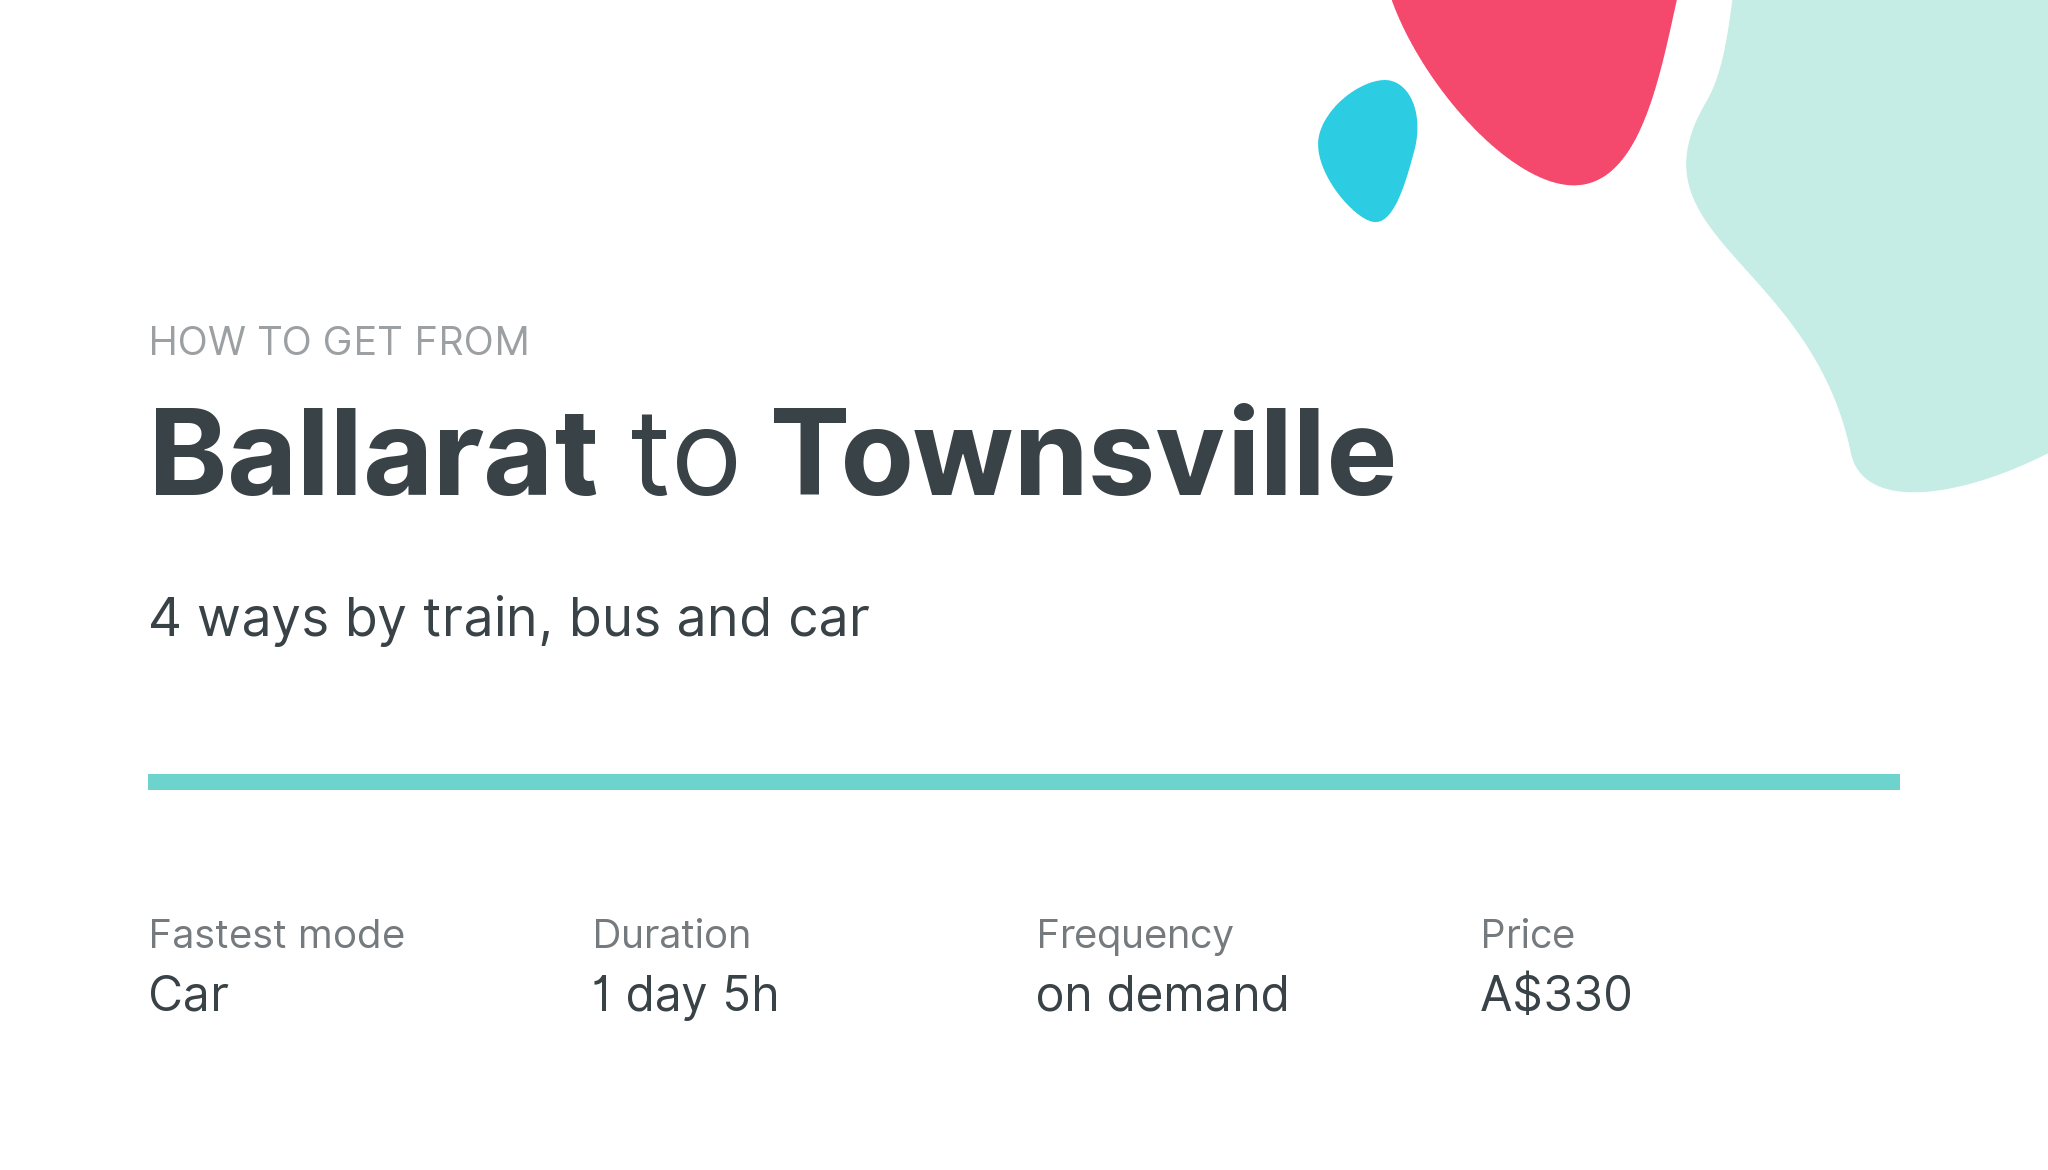 How do I get from Ballarat to Townsville